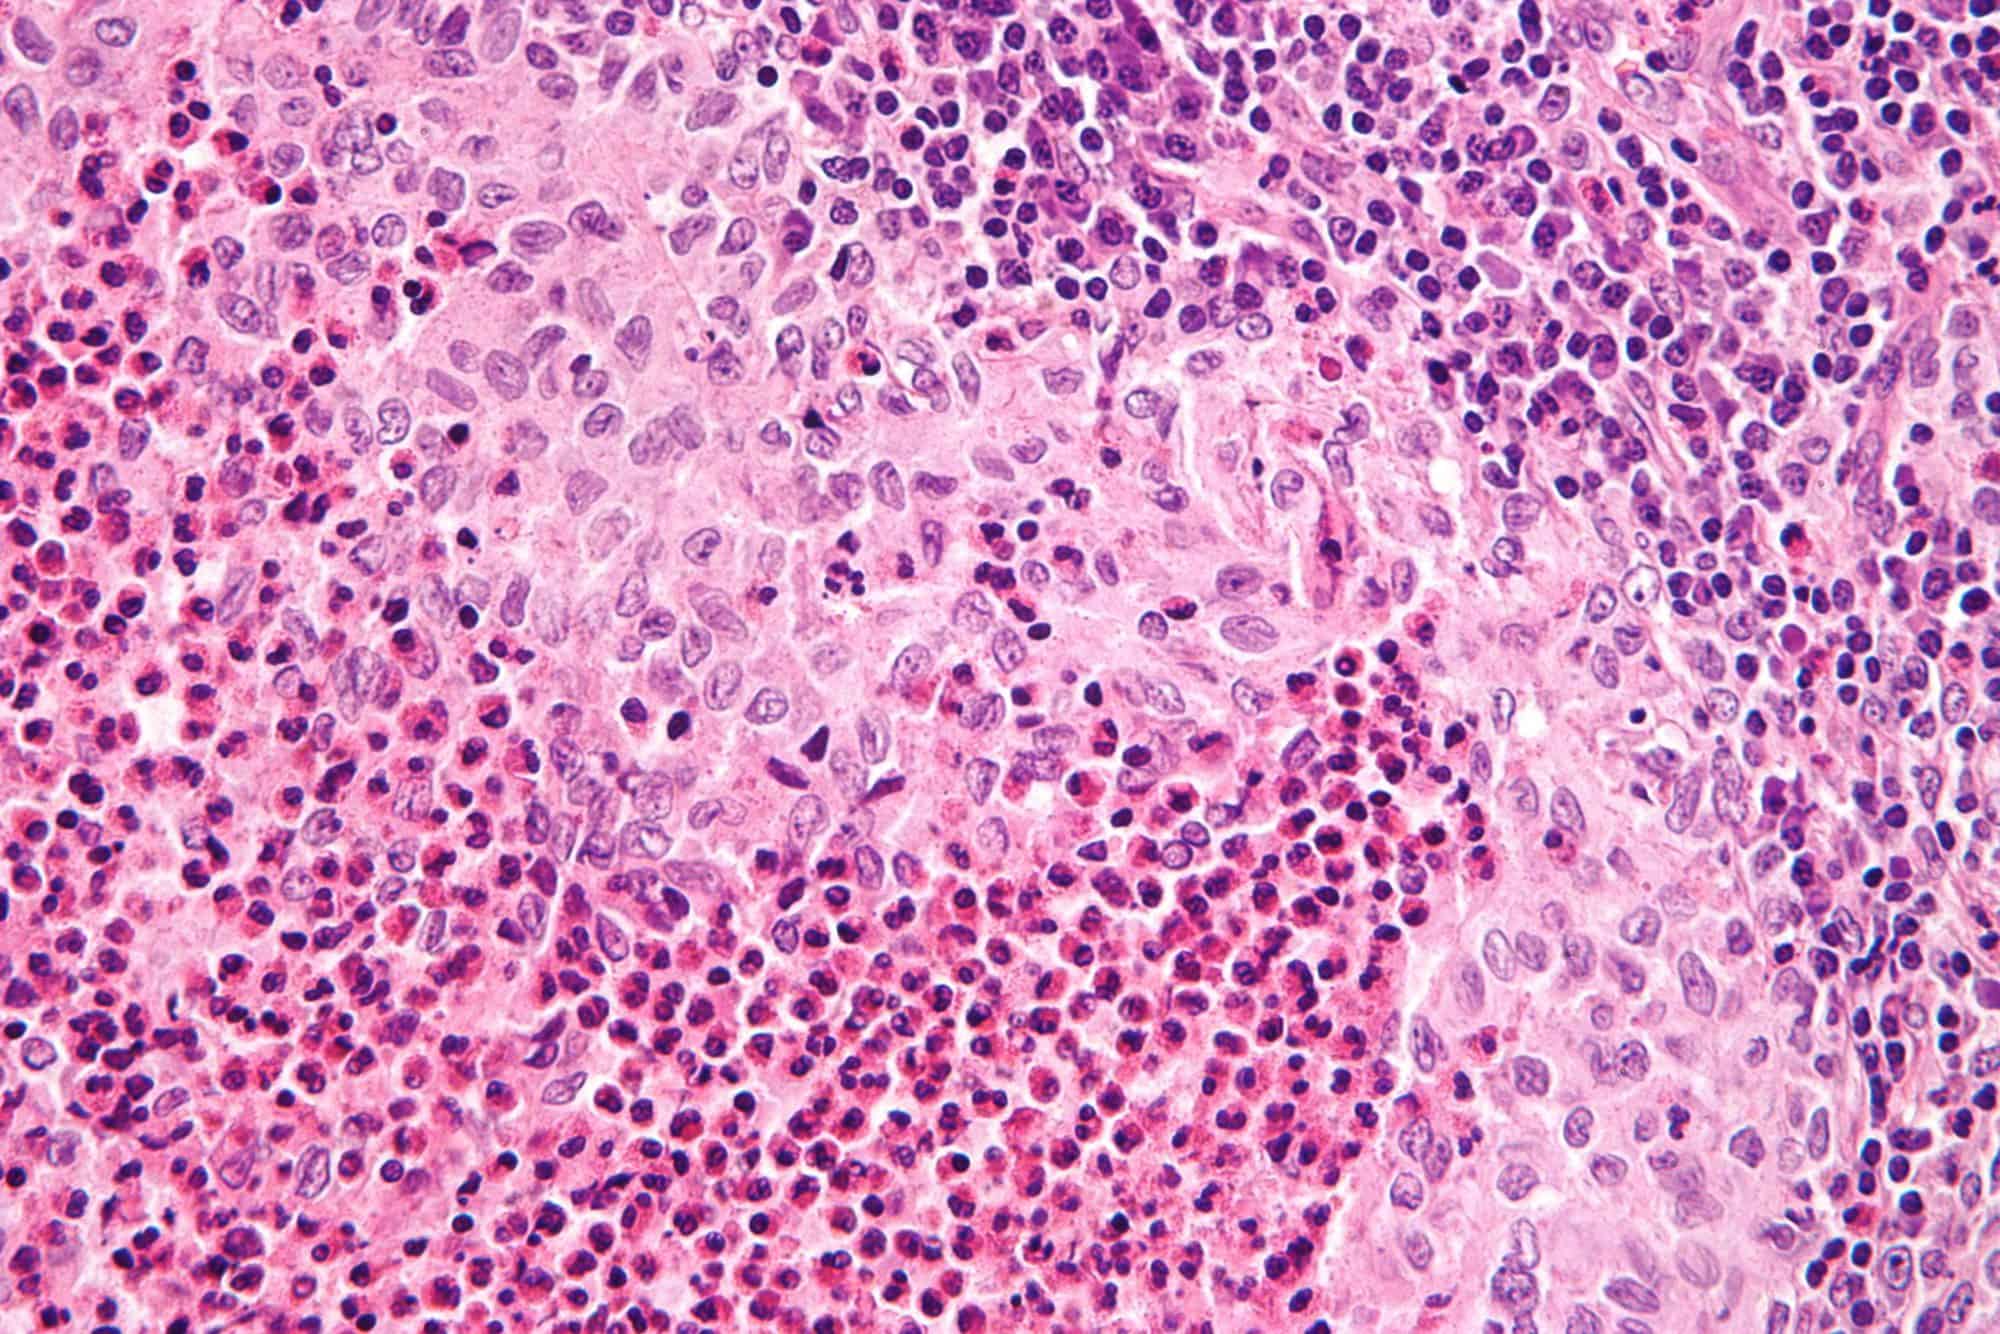 Langerhans Cell Histiocytosis